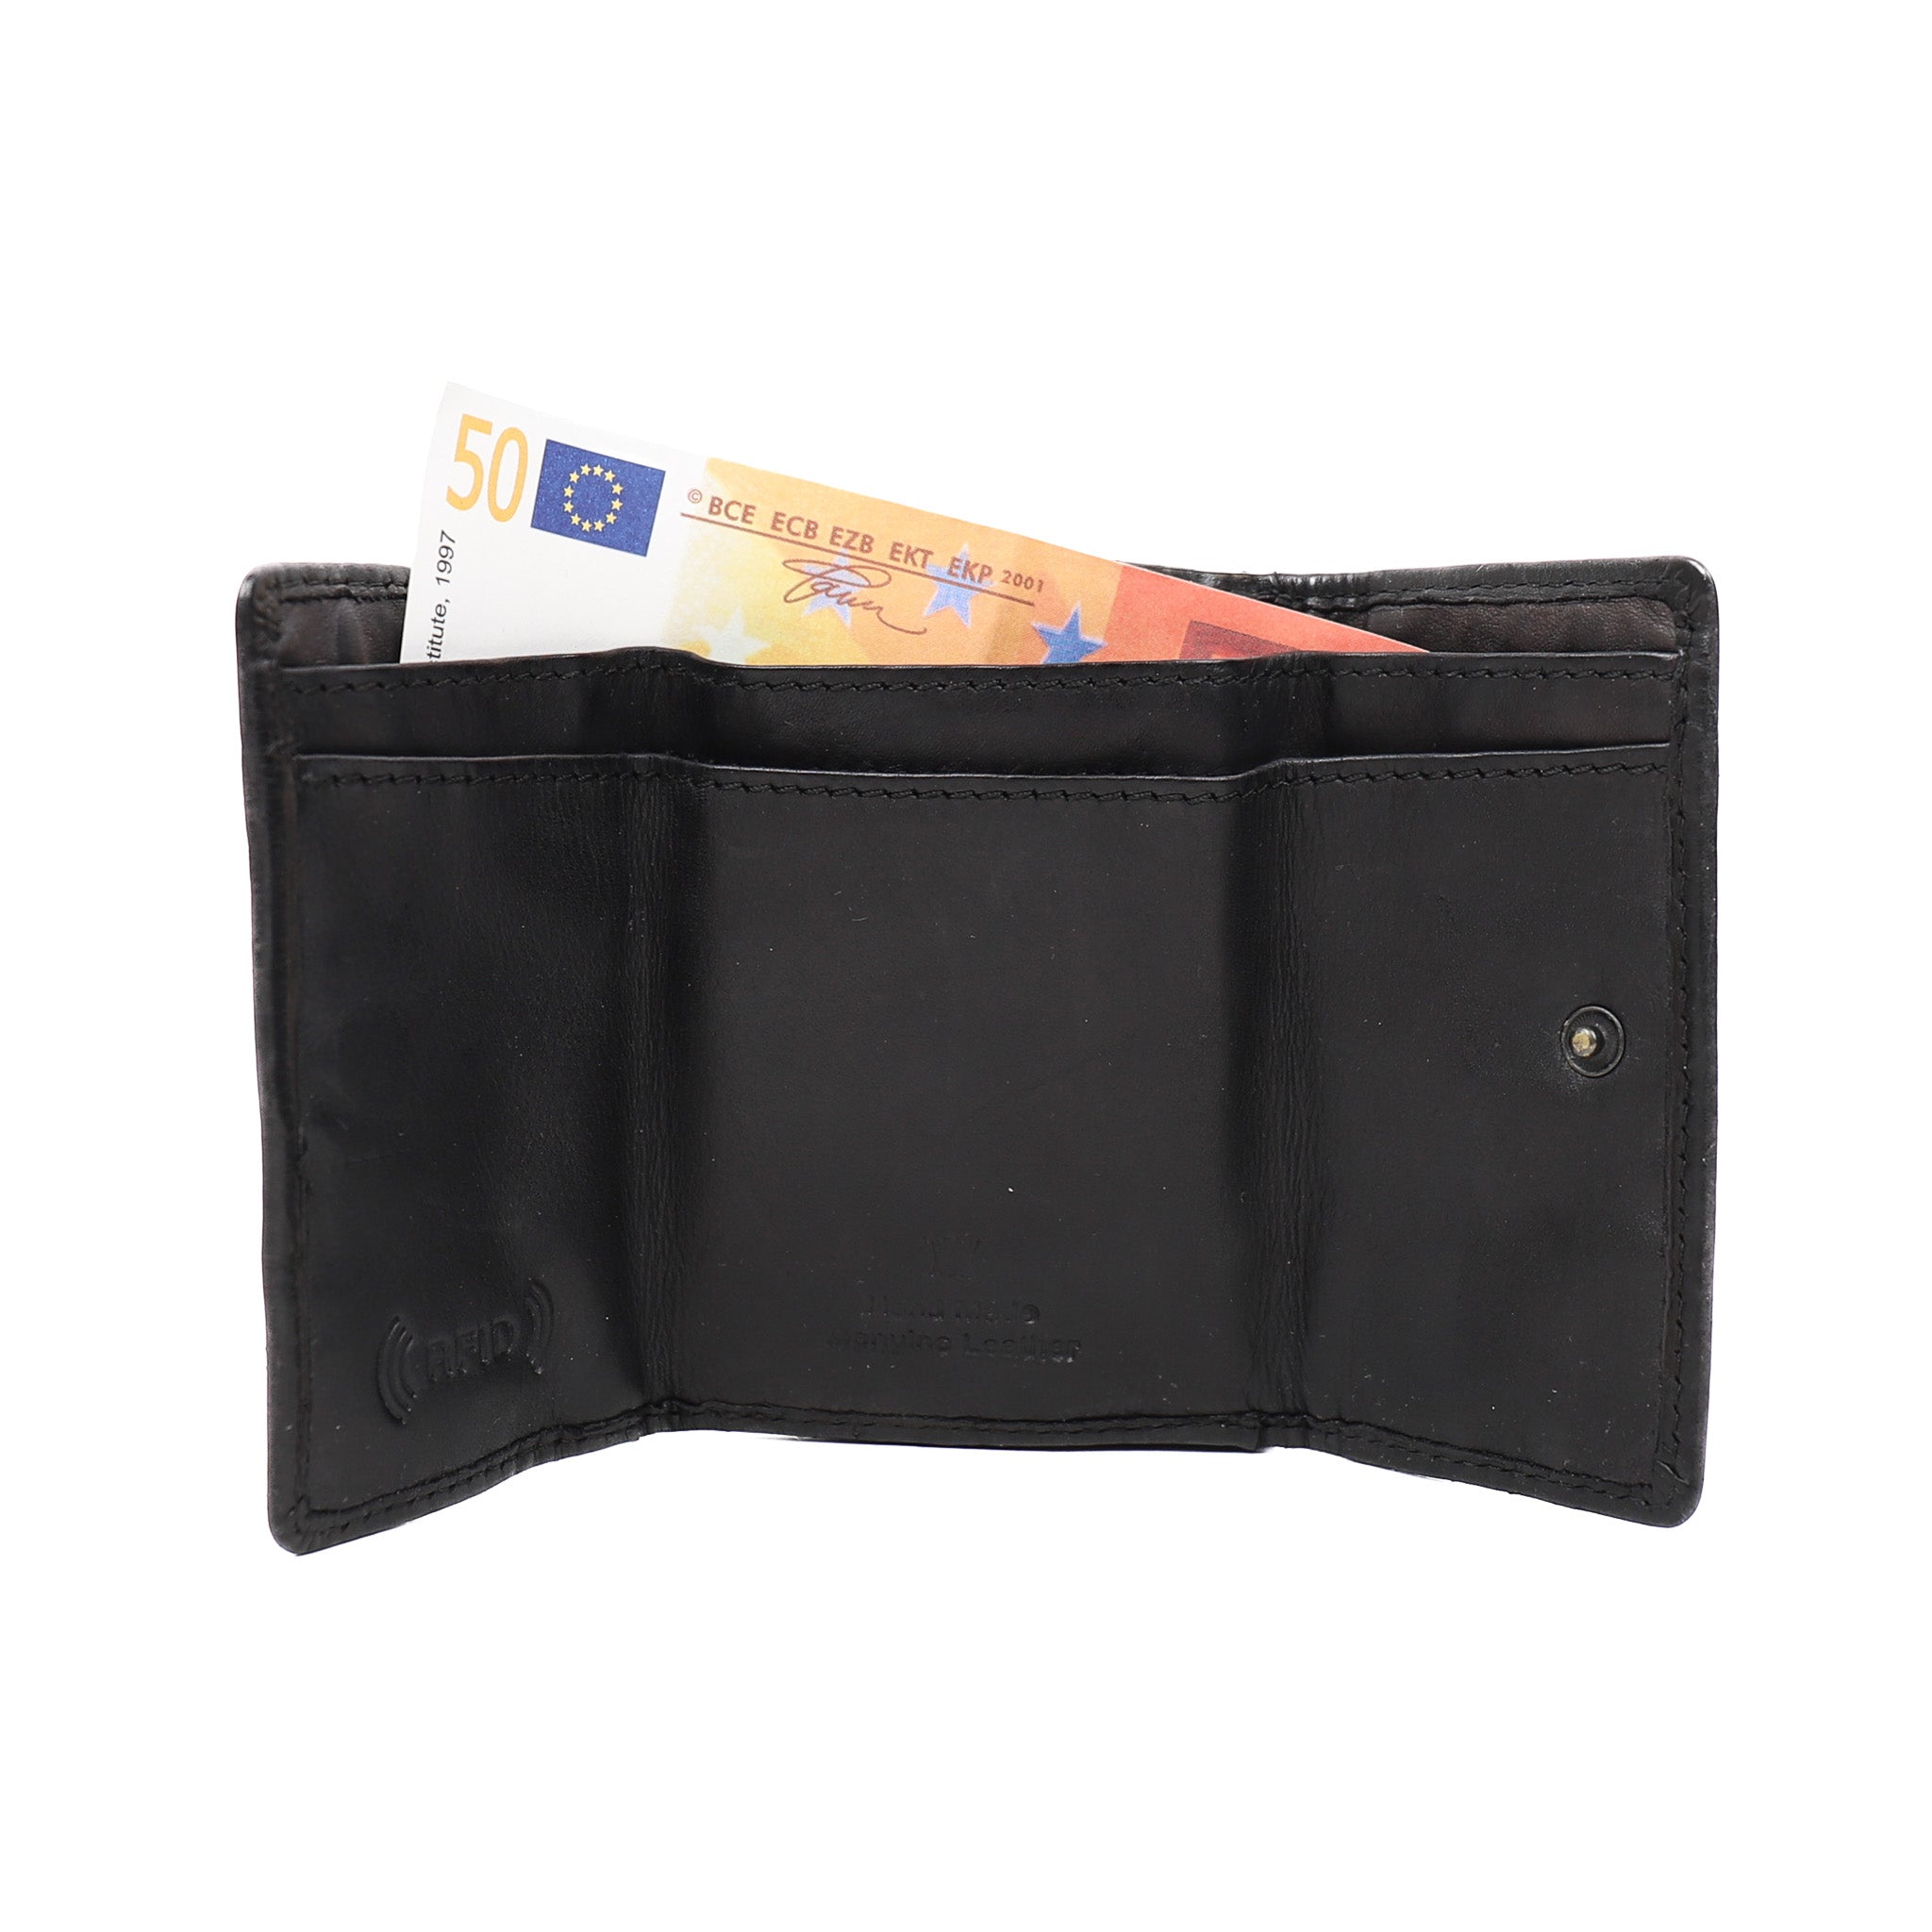 Wallet 'Jolie' black - CL 14618